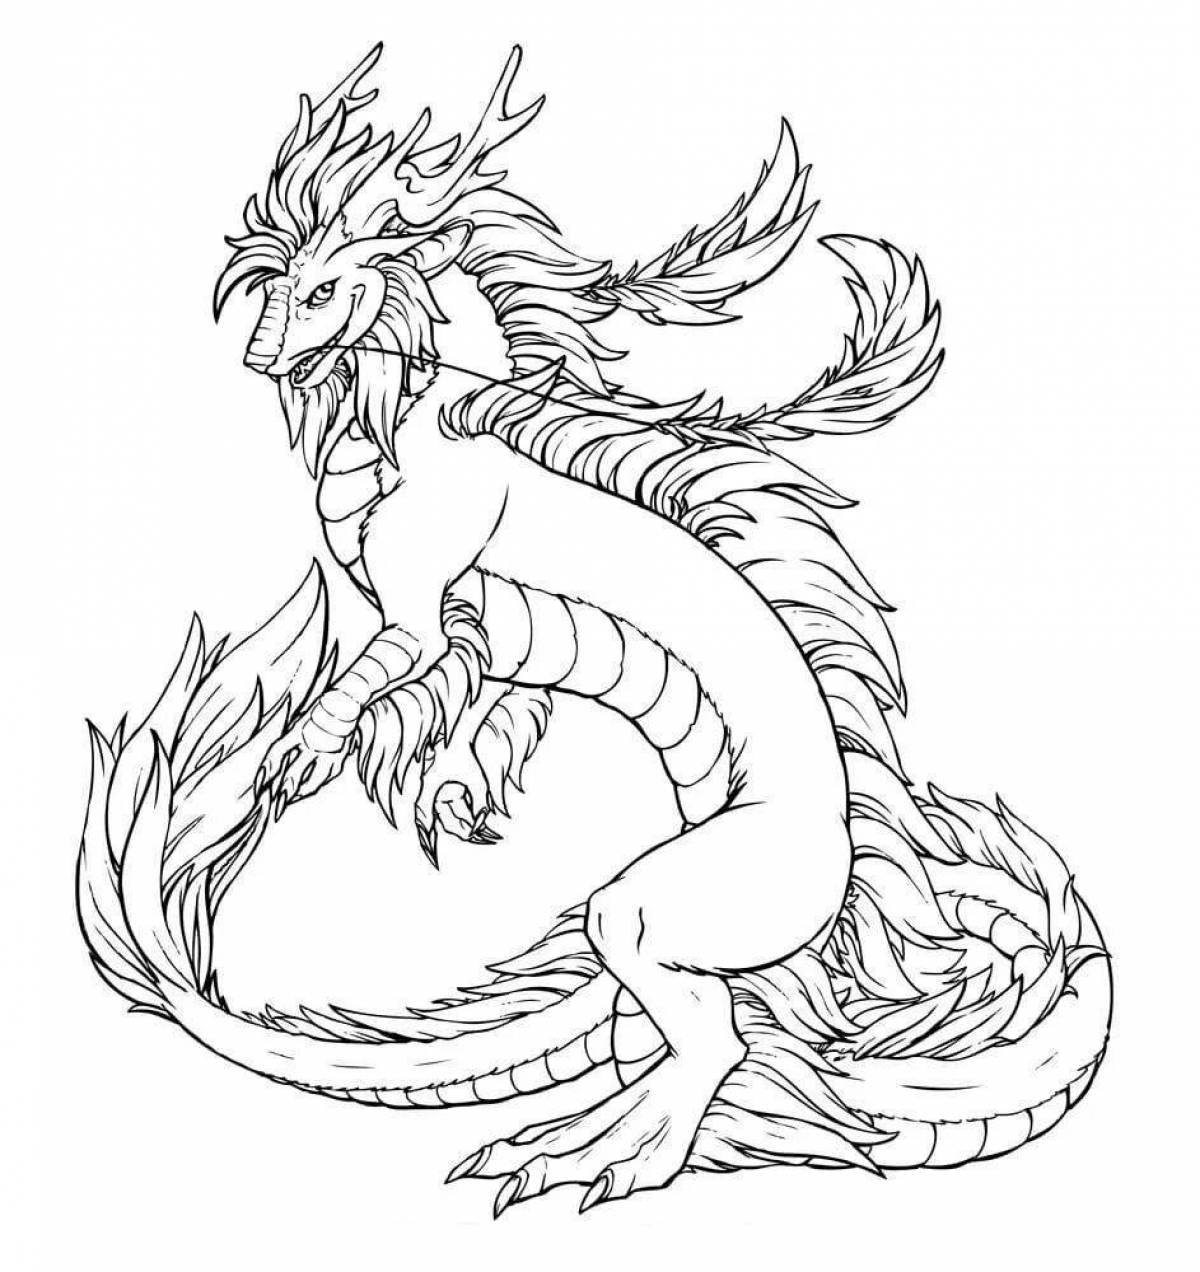 Wonderful water dragon coloring page